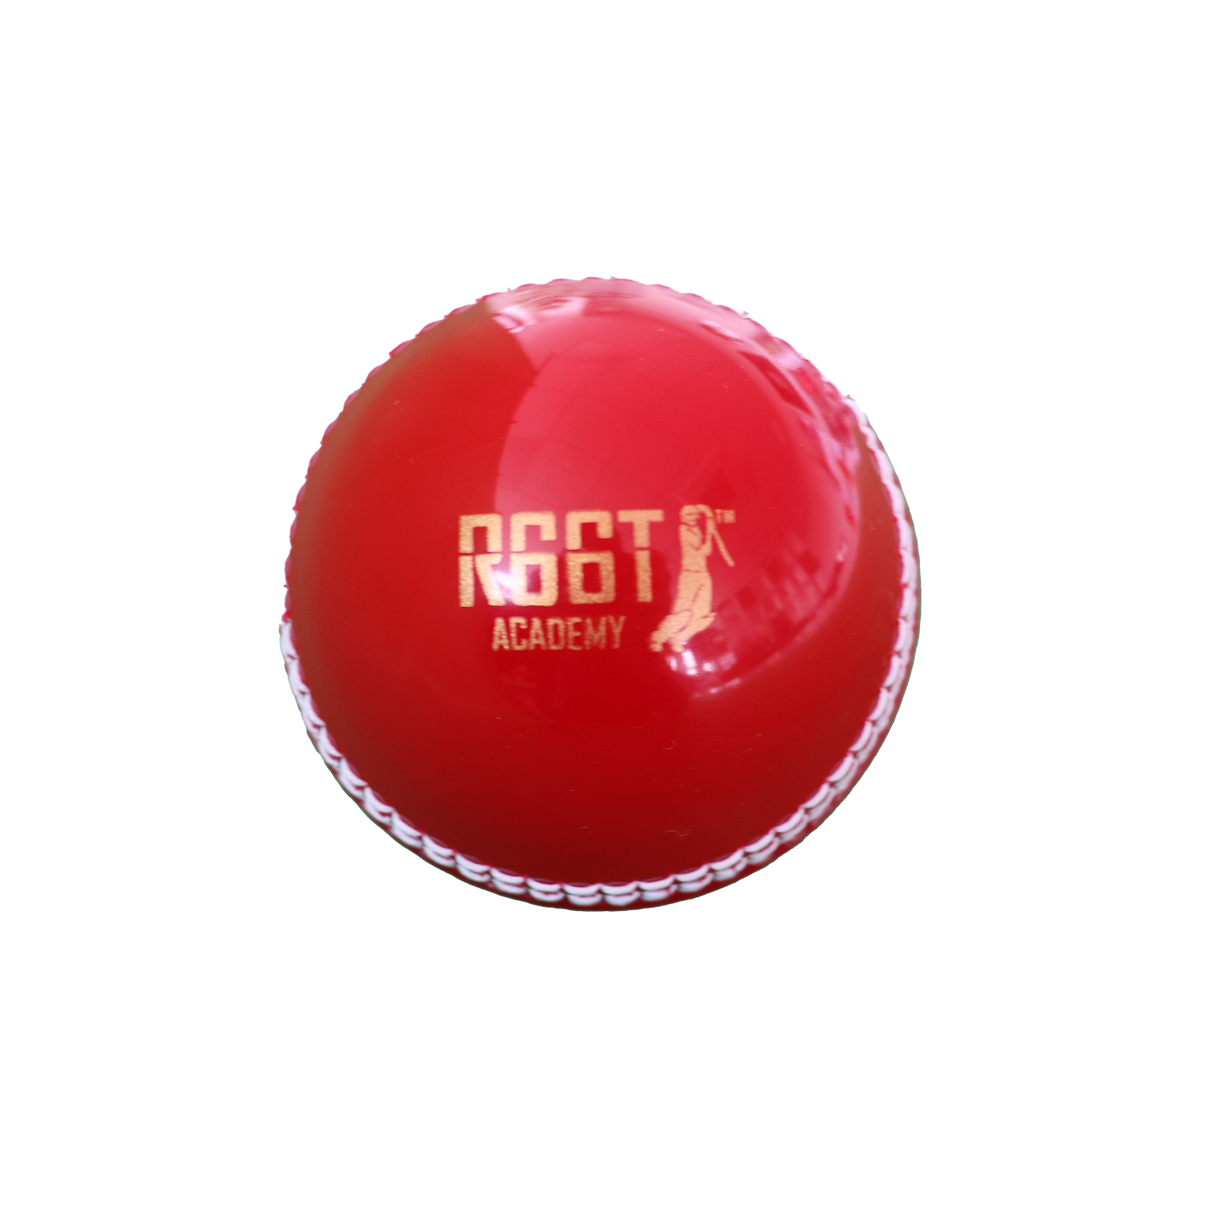 R66T Academy Cricket Skill Ball